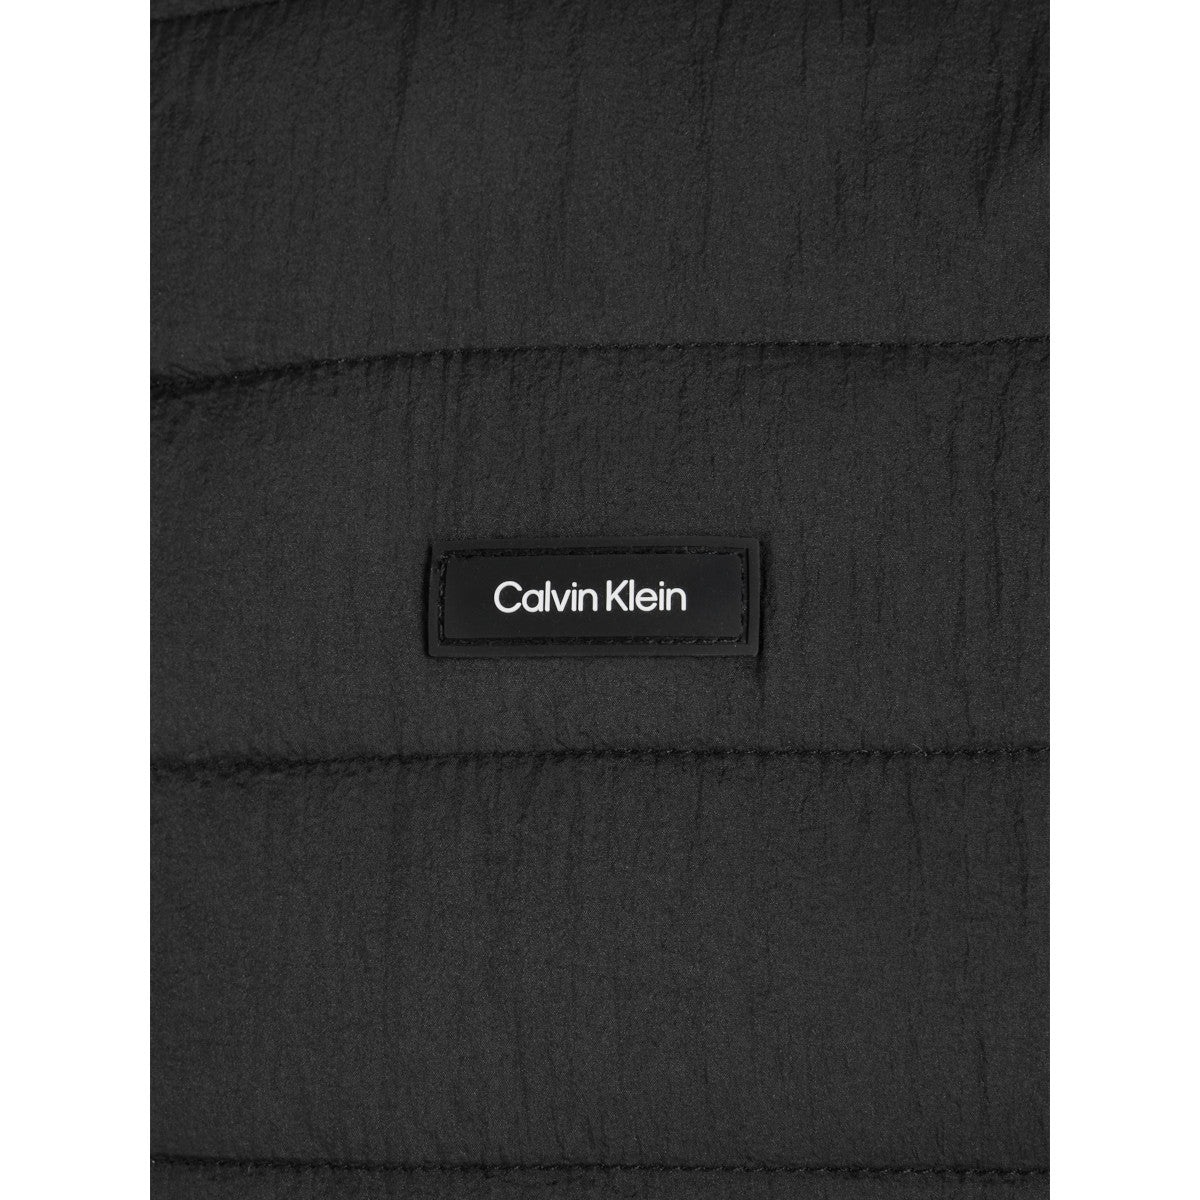 Calvin Klein Crinkle Quilt Gilet BEH Black